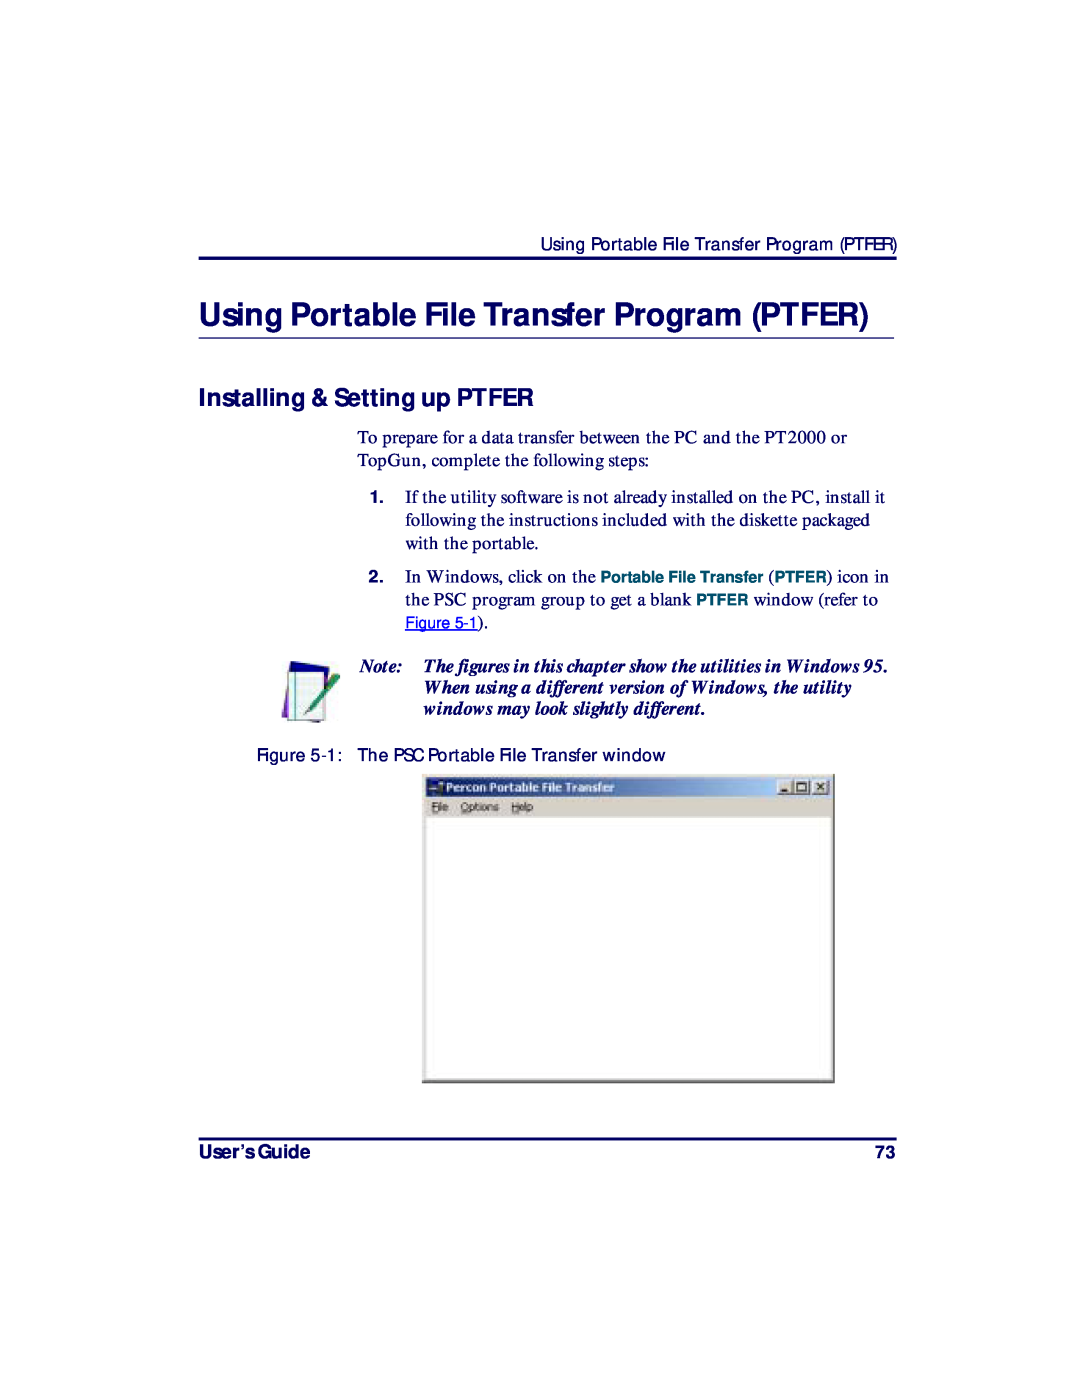 PSC PT2000, TopGun manual Using Portable File Transfer Program PTFER, Installing & Setting up PTFER, User’s Guide 